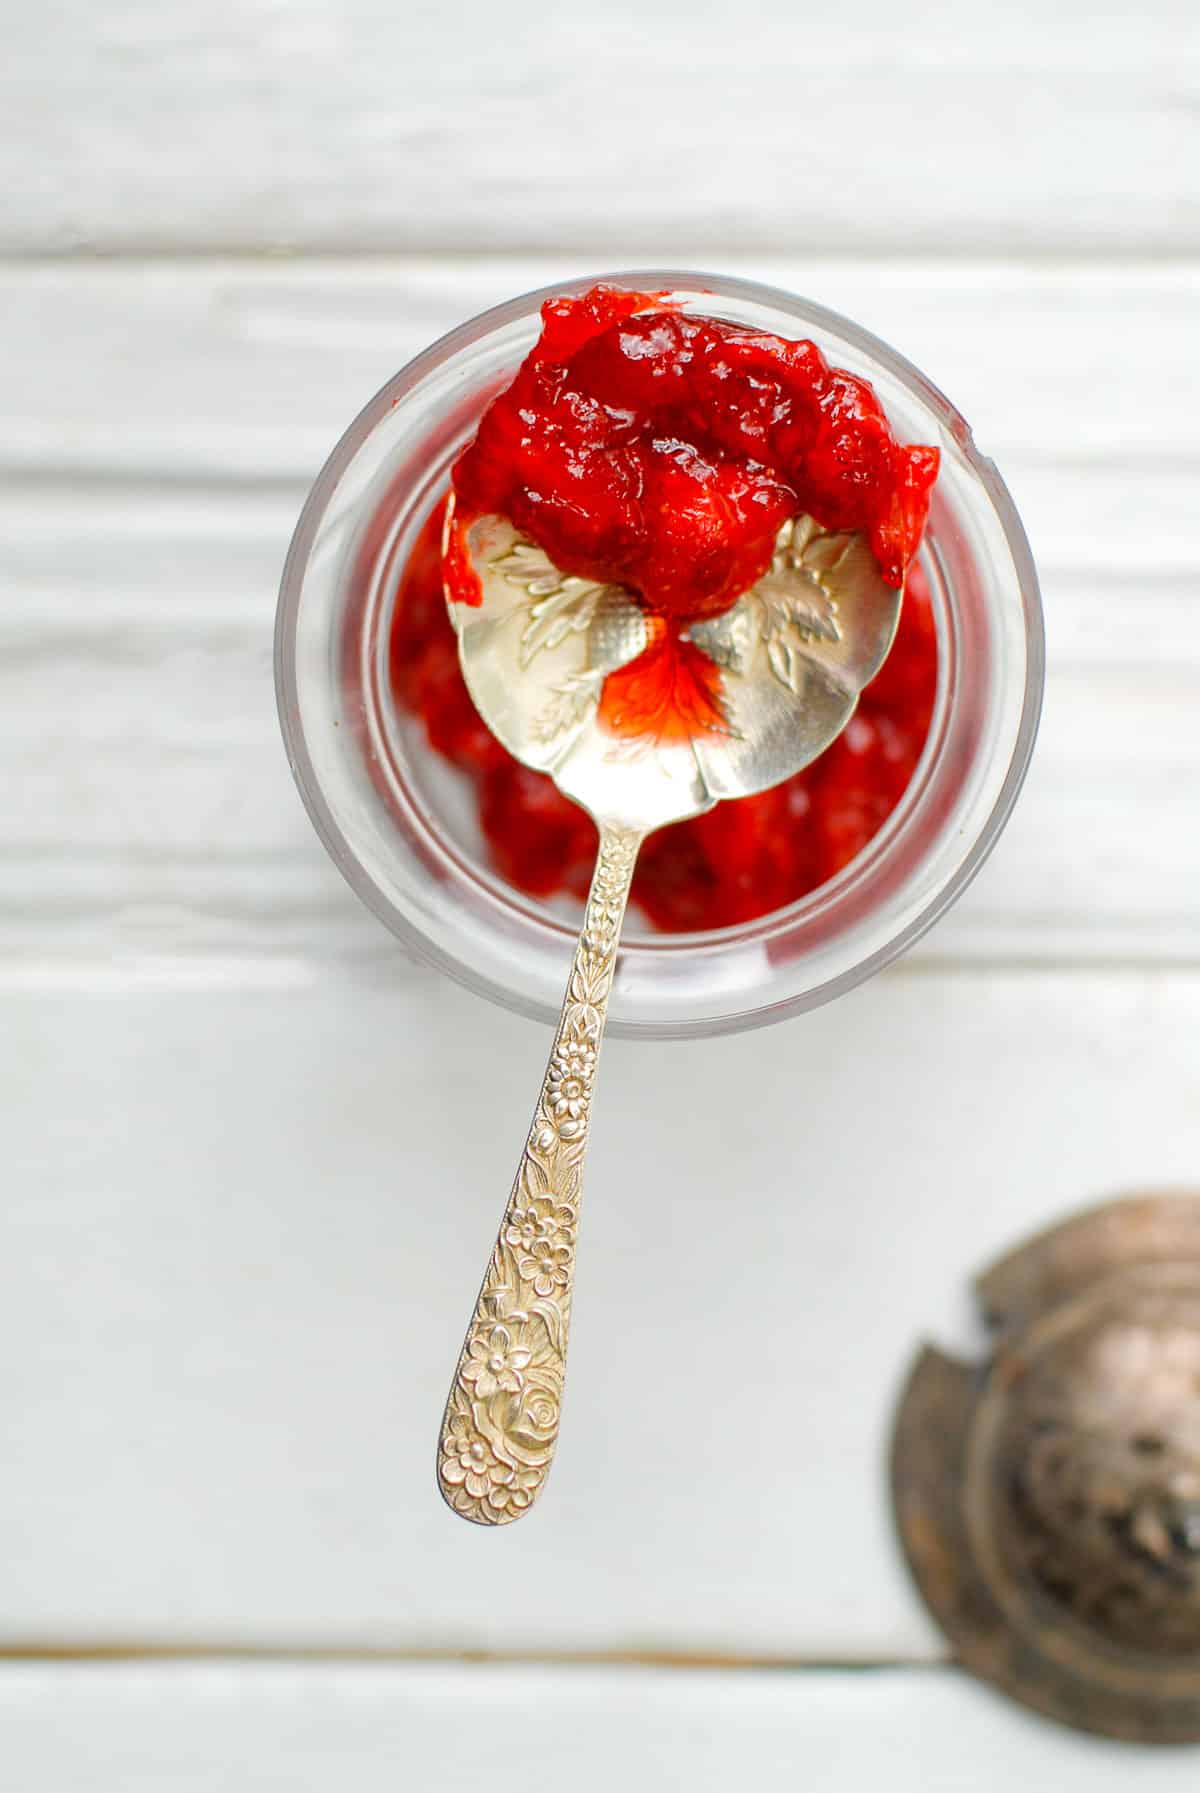 homemade strawberry jam on antique spoon